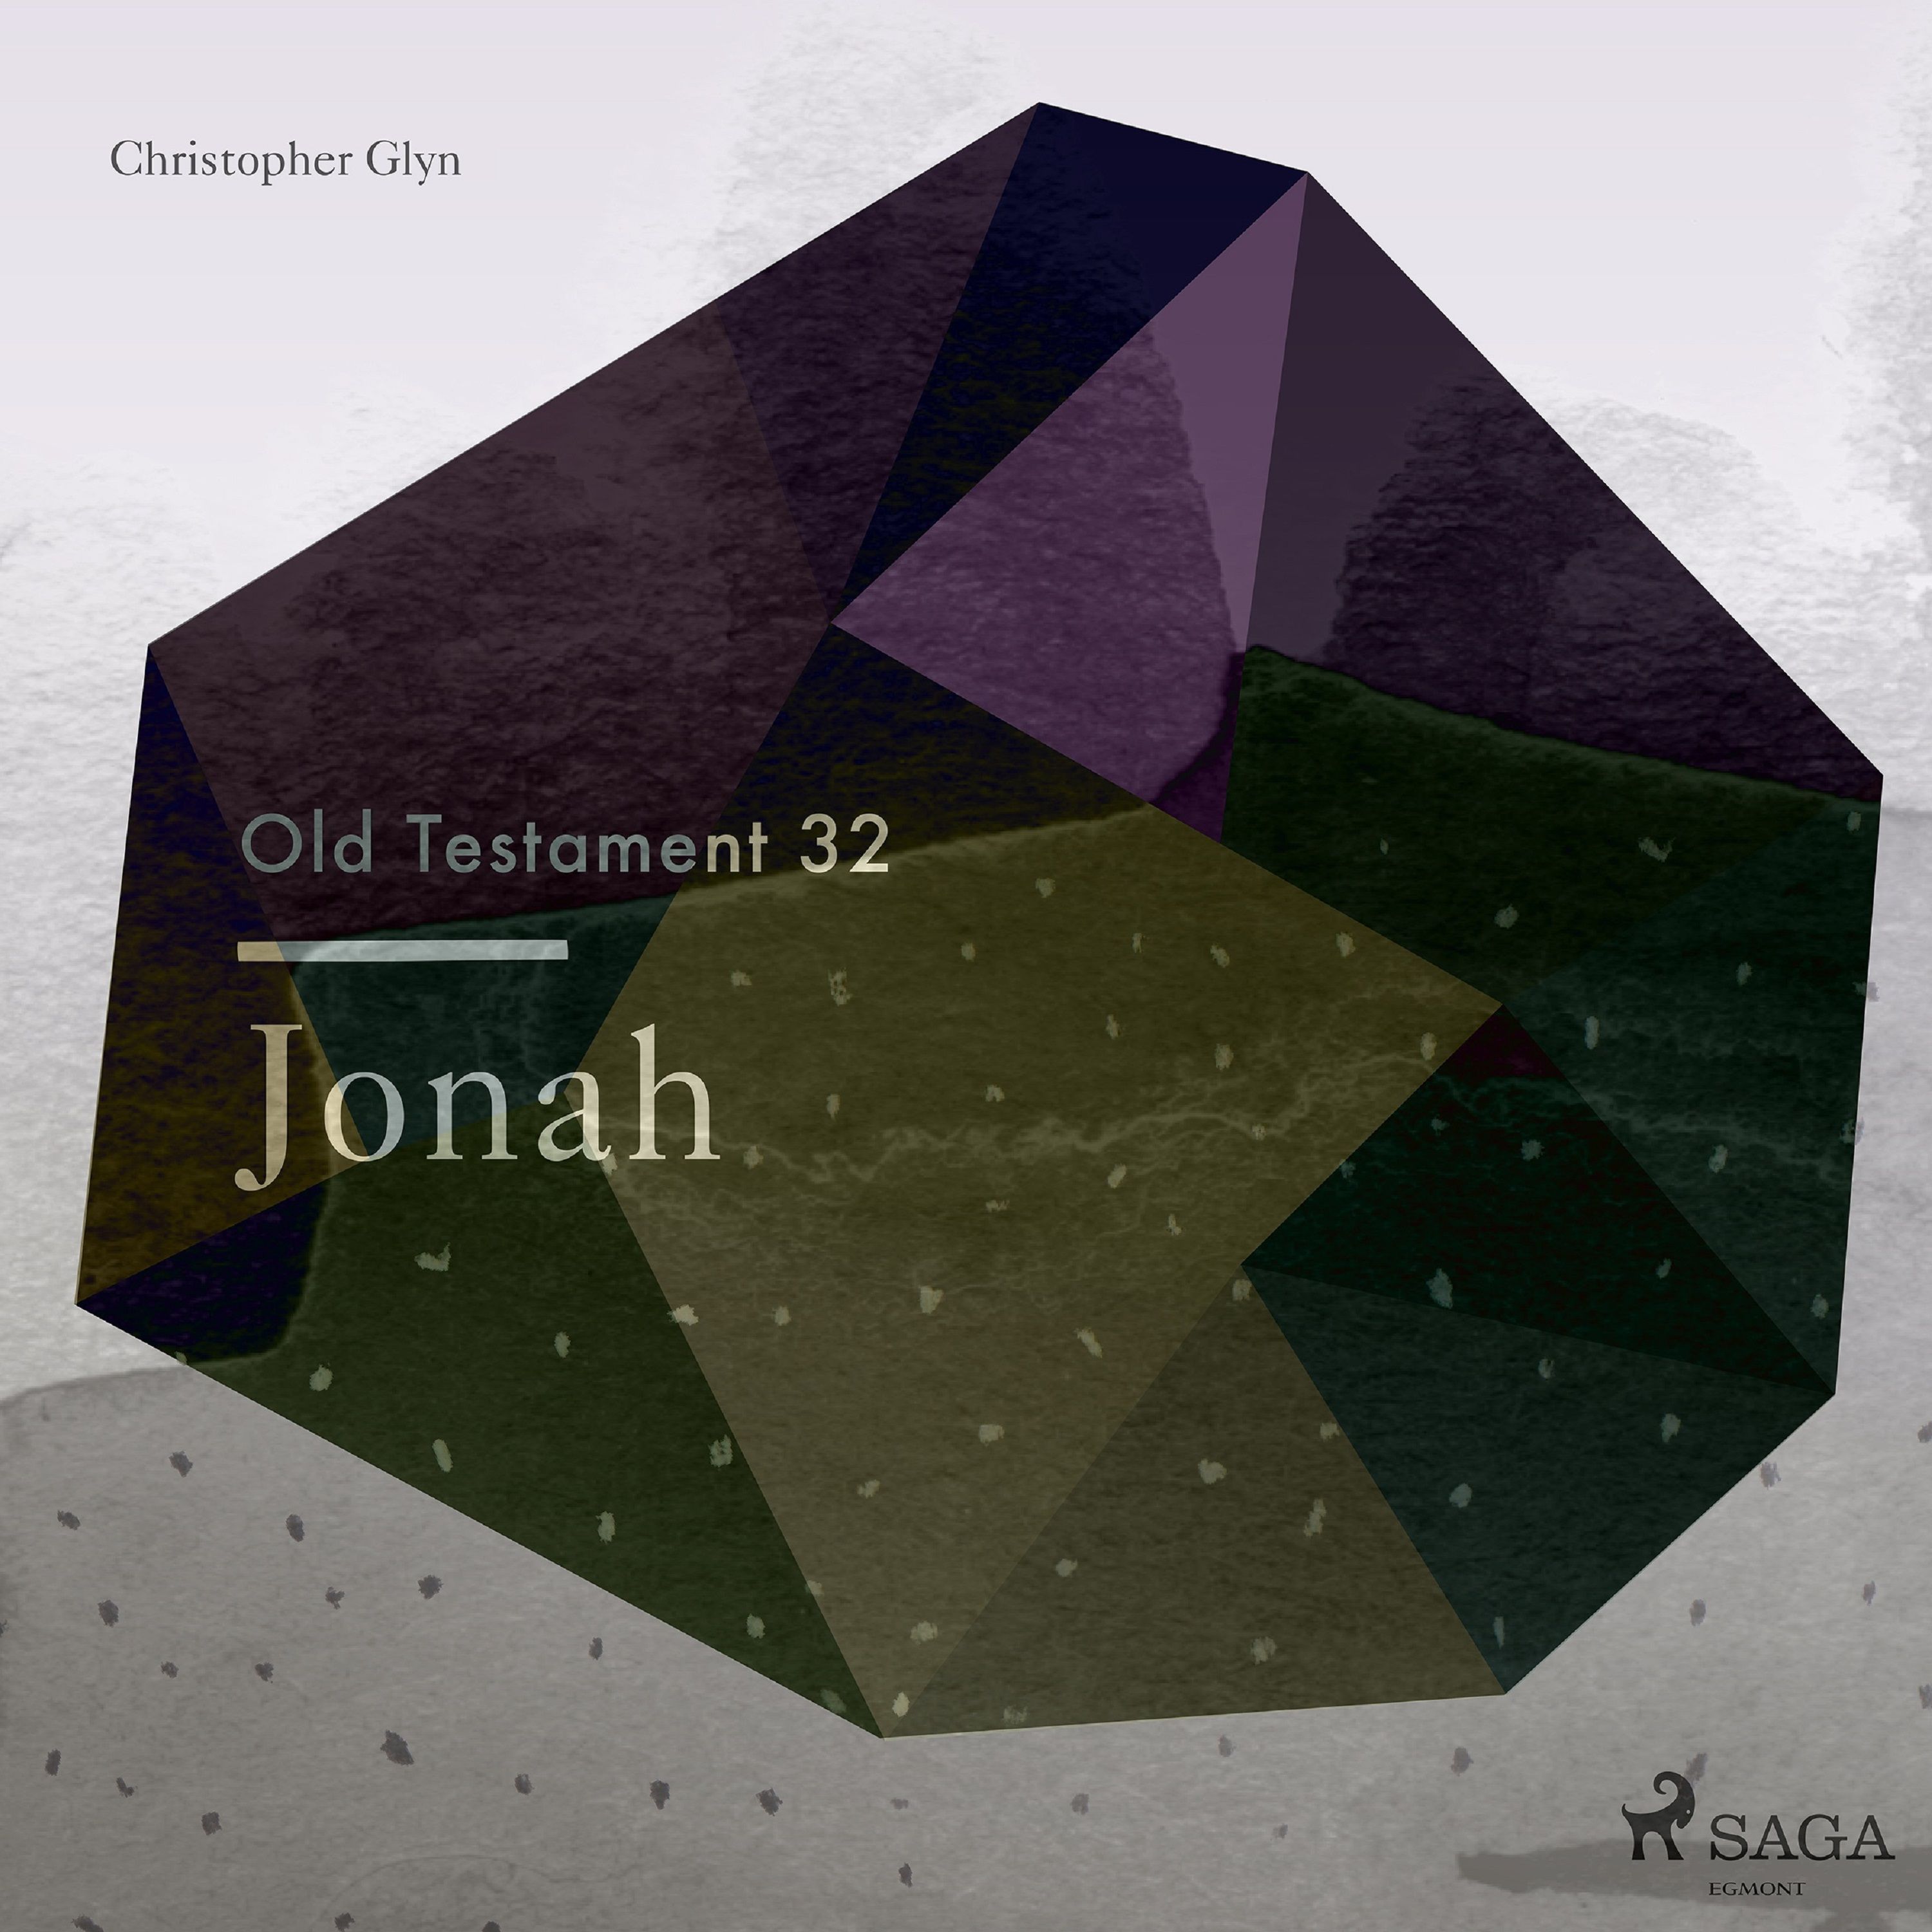 The Old Testament 32 - Jonah, ljudbok av Christopher Glyn